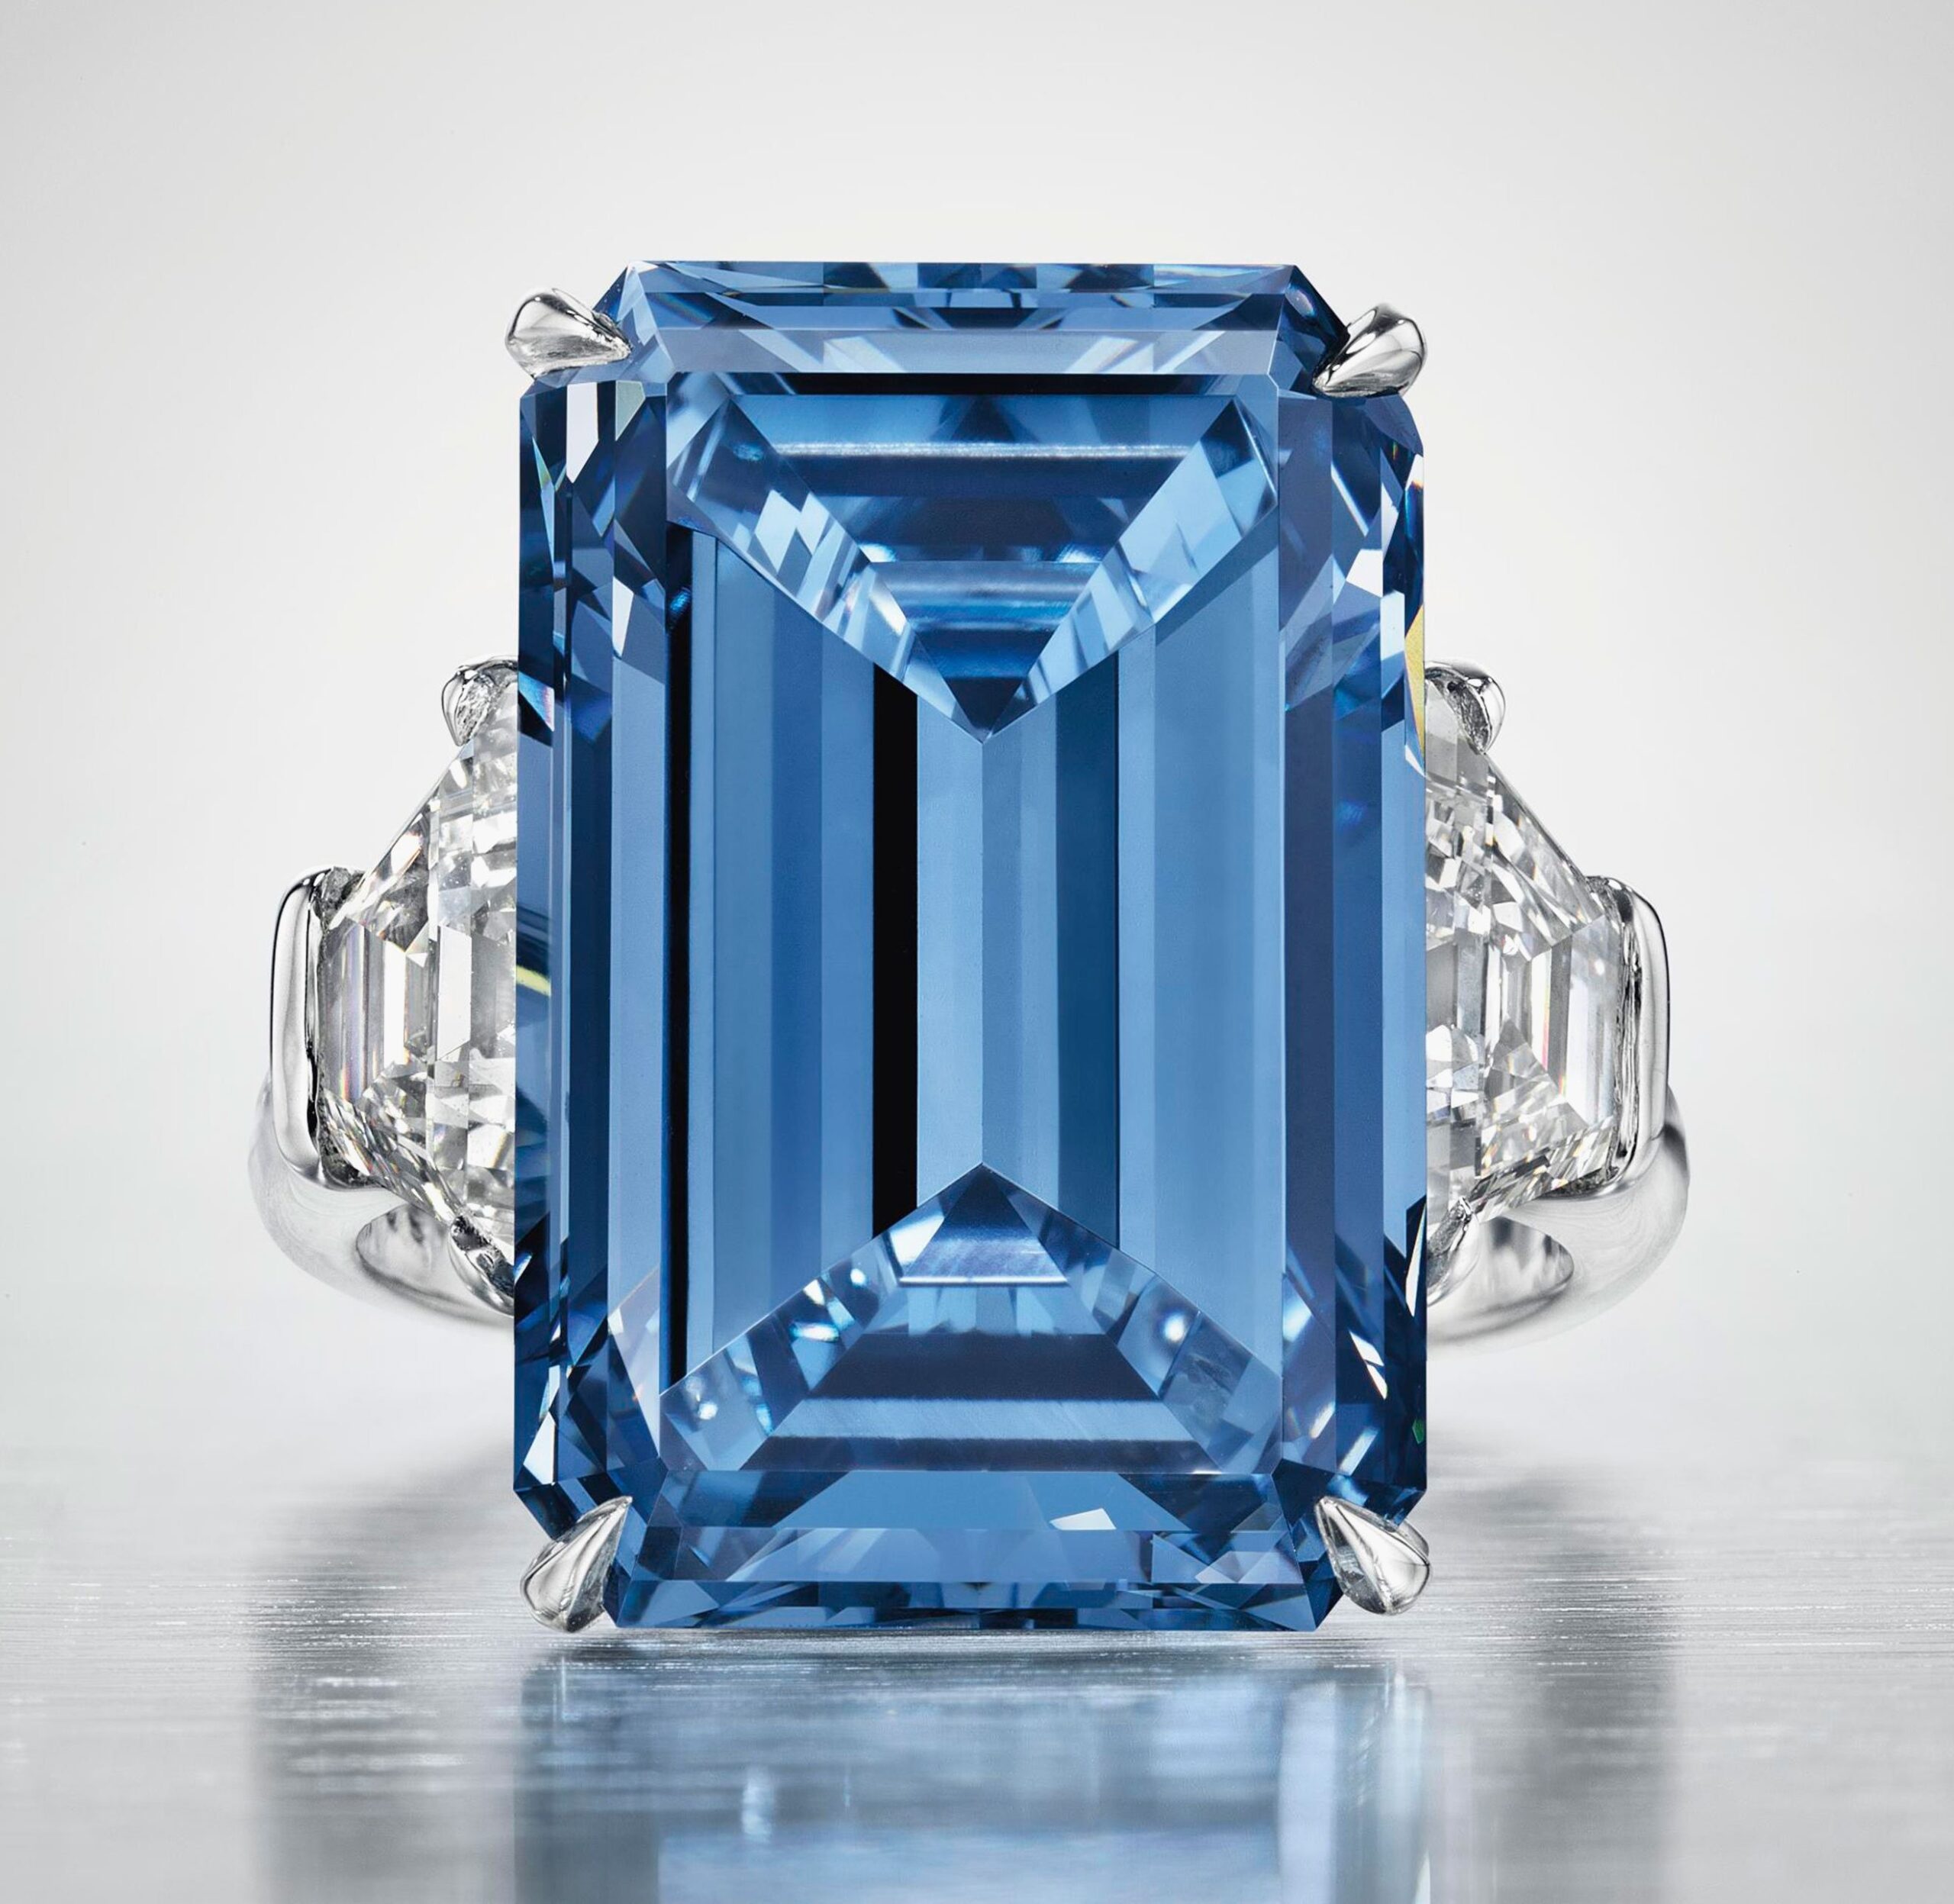 Oppenheimer Blue largest Fancy Vivid Blue diamond